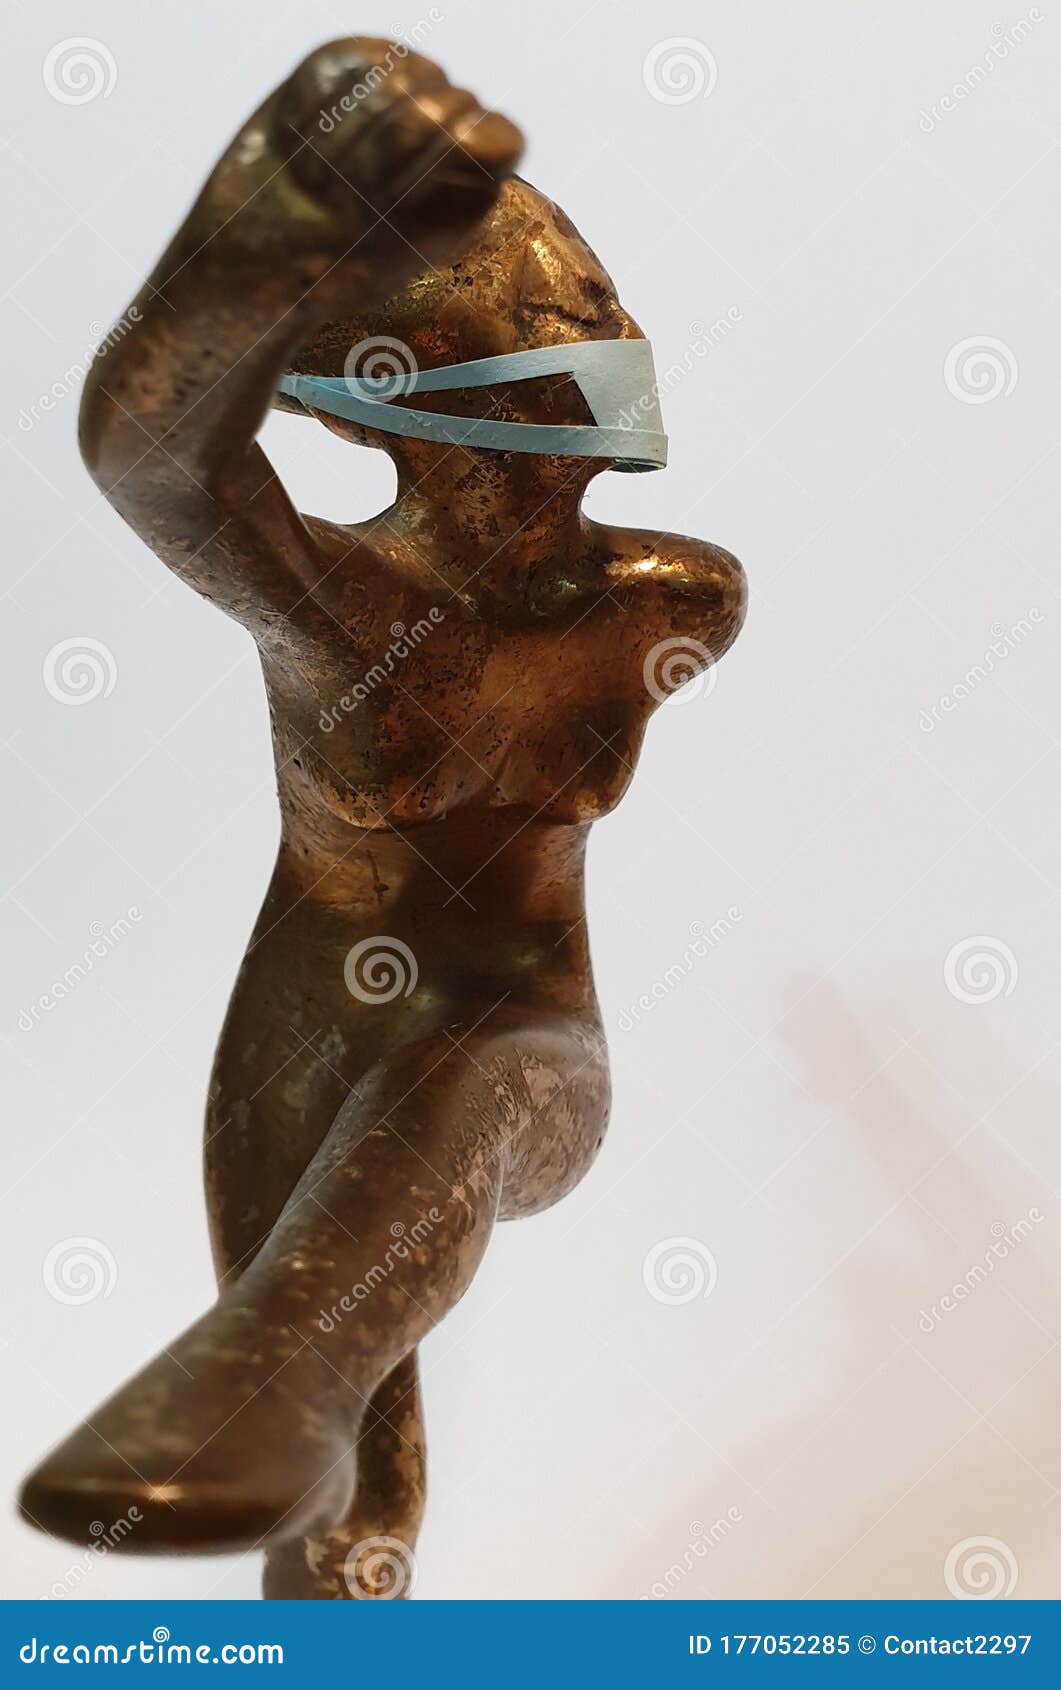 coronavirus metaphore vintage brass statue dancer girl